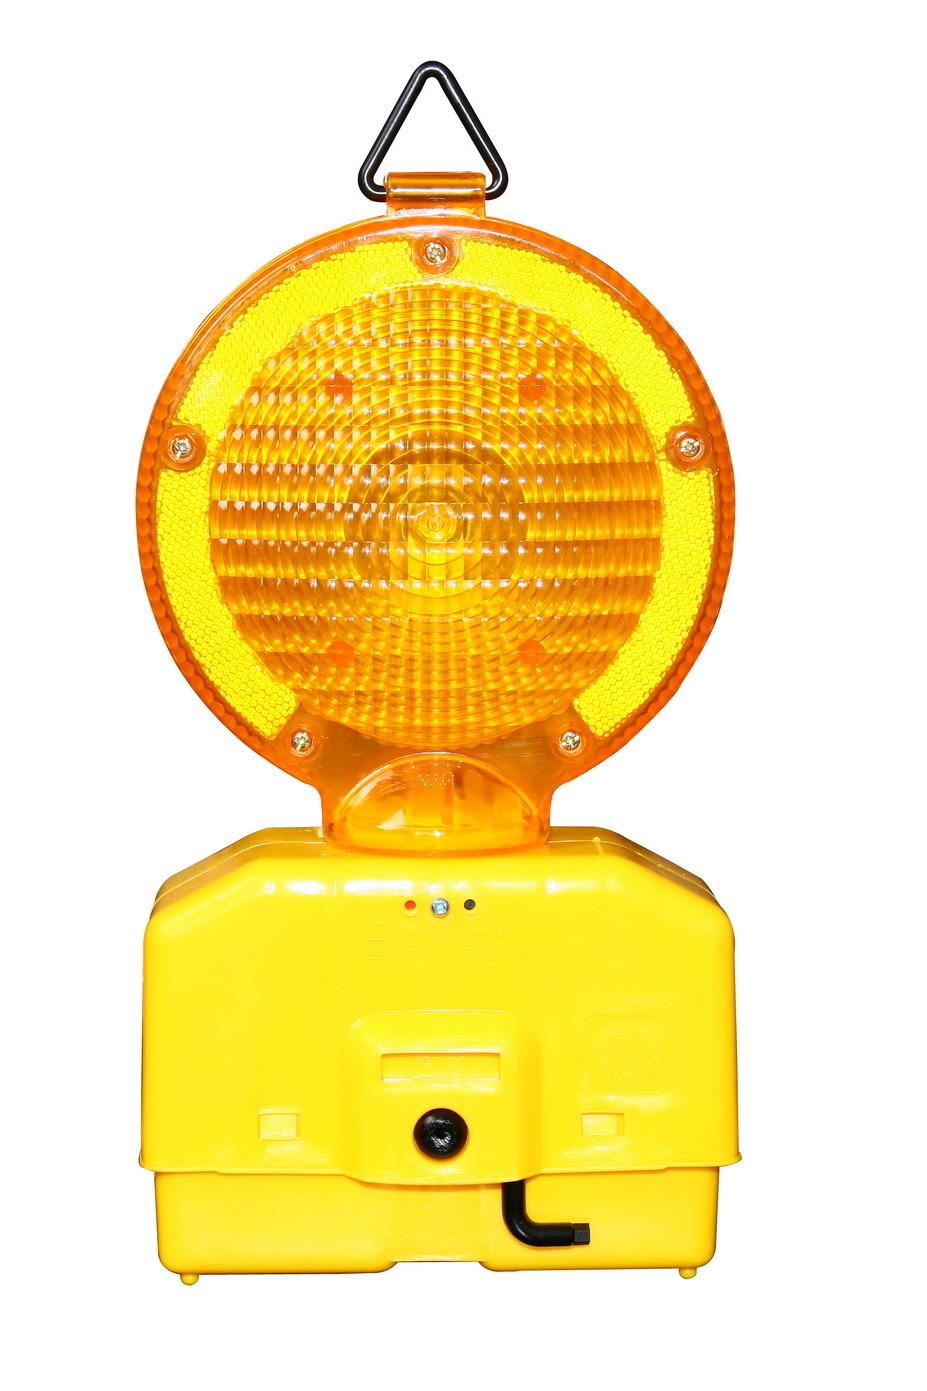 LED Solar Flashing Red/Yellow Warning Traffic Lamp for Road